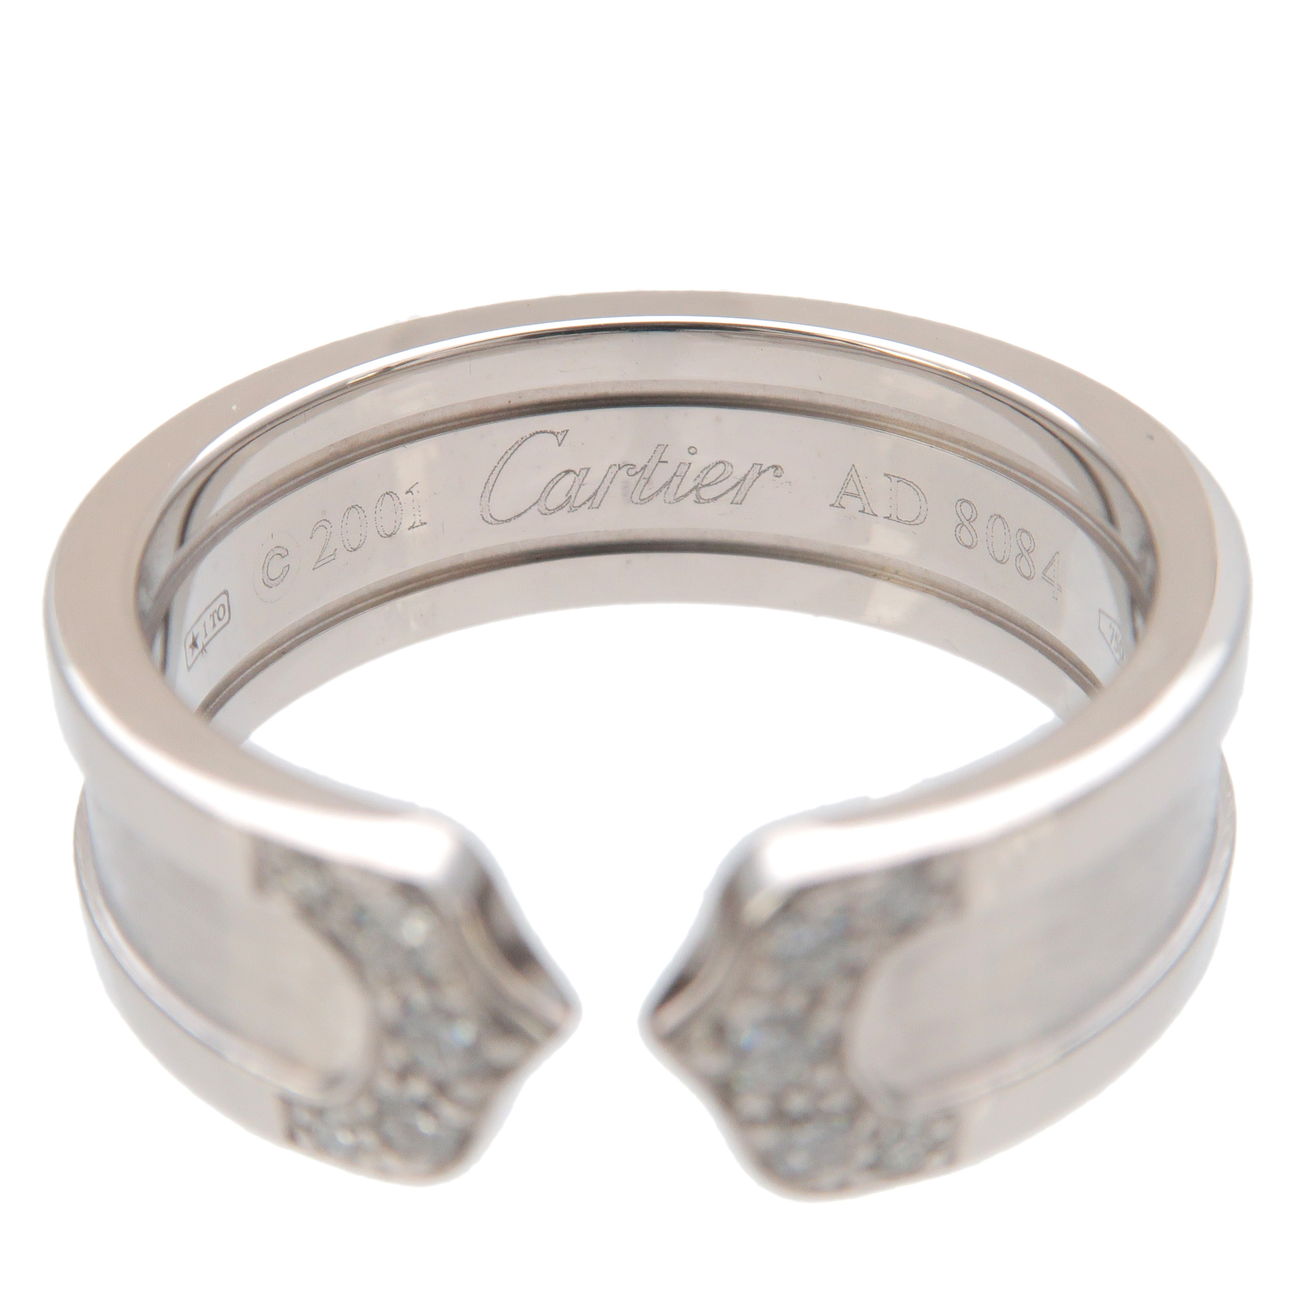 Cartier C2 Diamond Ring SM K18WG White Gold #53 US6.5-7 EU53.5